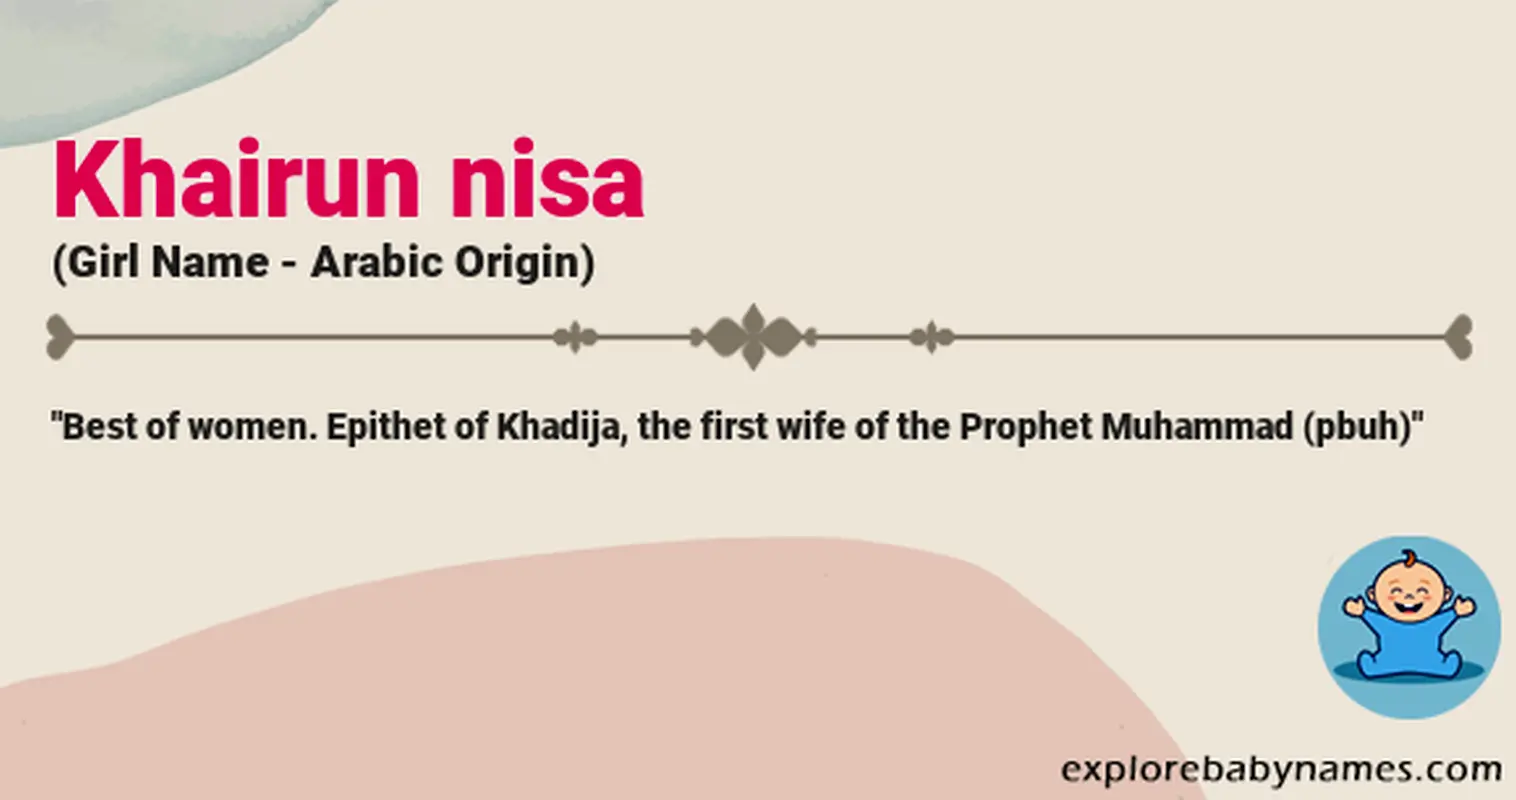 Meaning of Khairun nisa